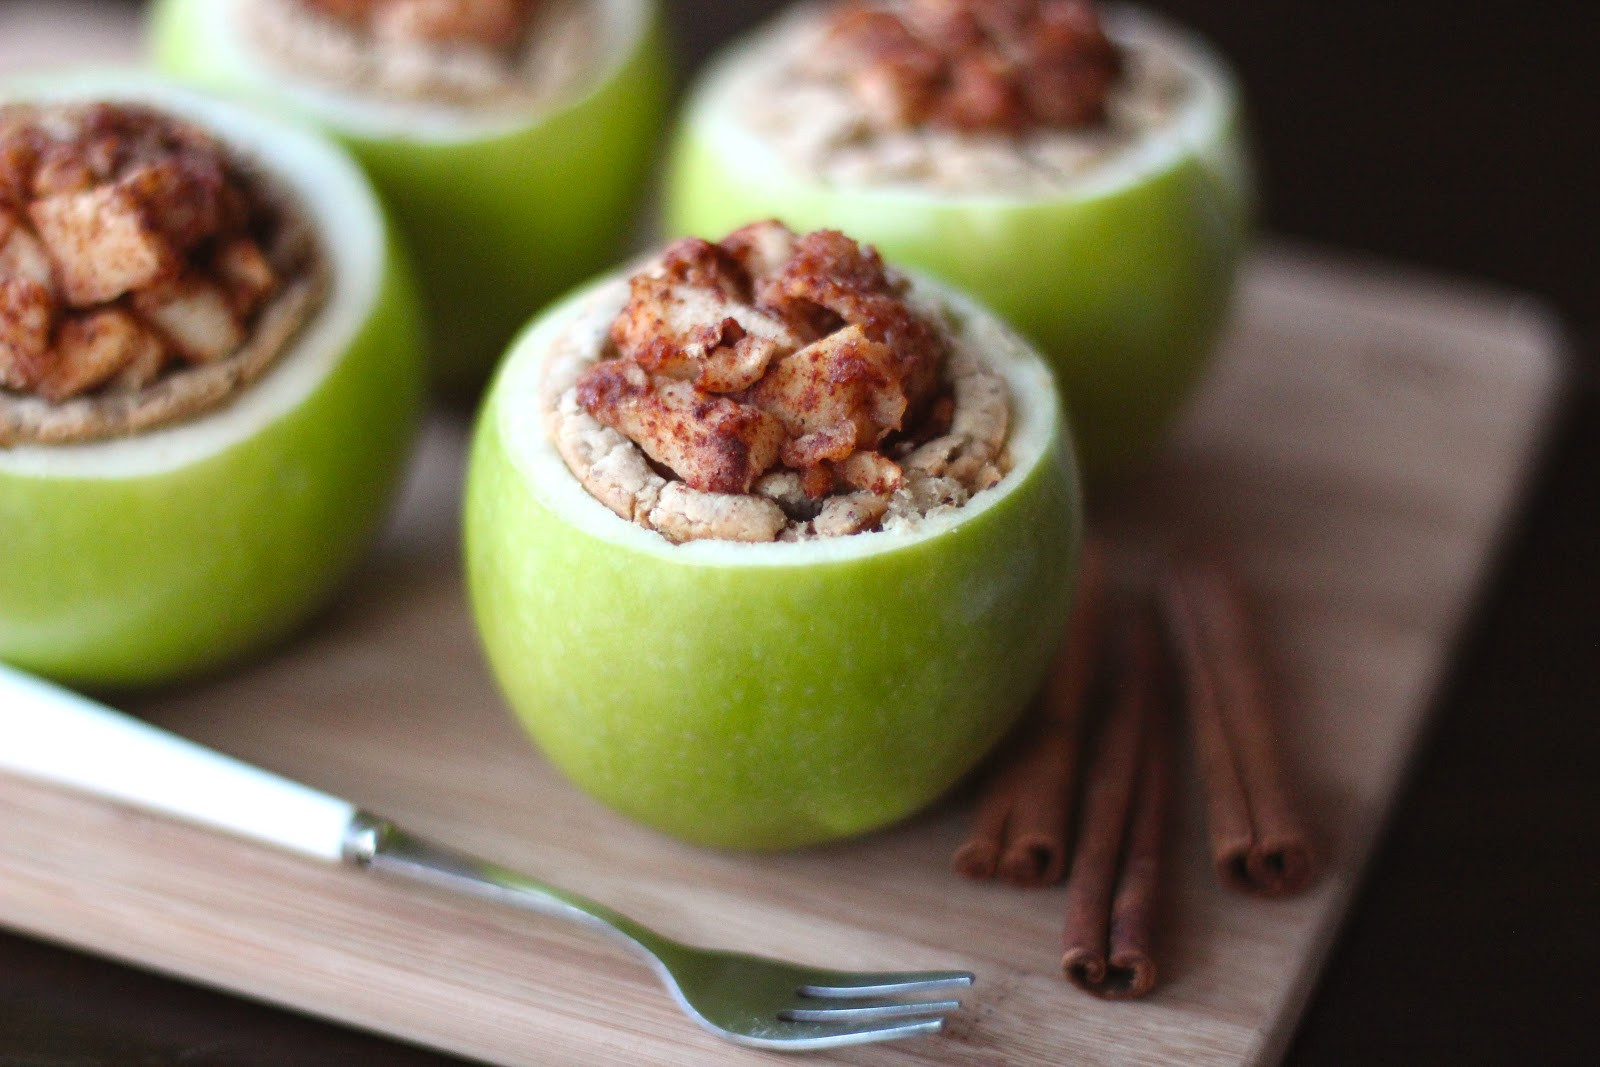 Apple Desserts Healthy 20 Best Ideas Healthy Apple Pie In An Apple Desserts with Benefits